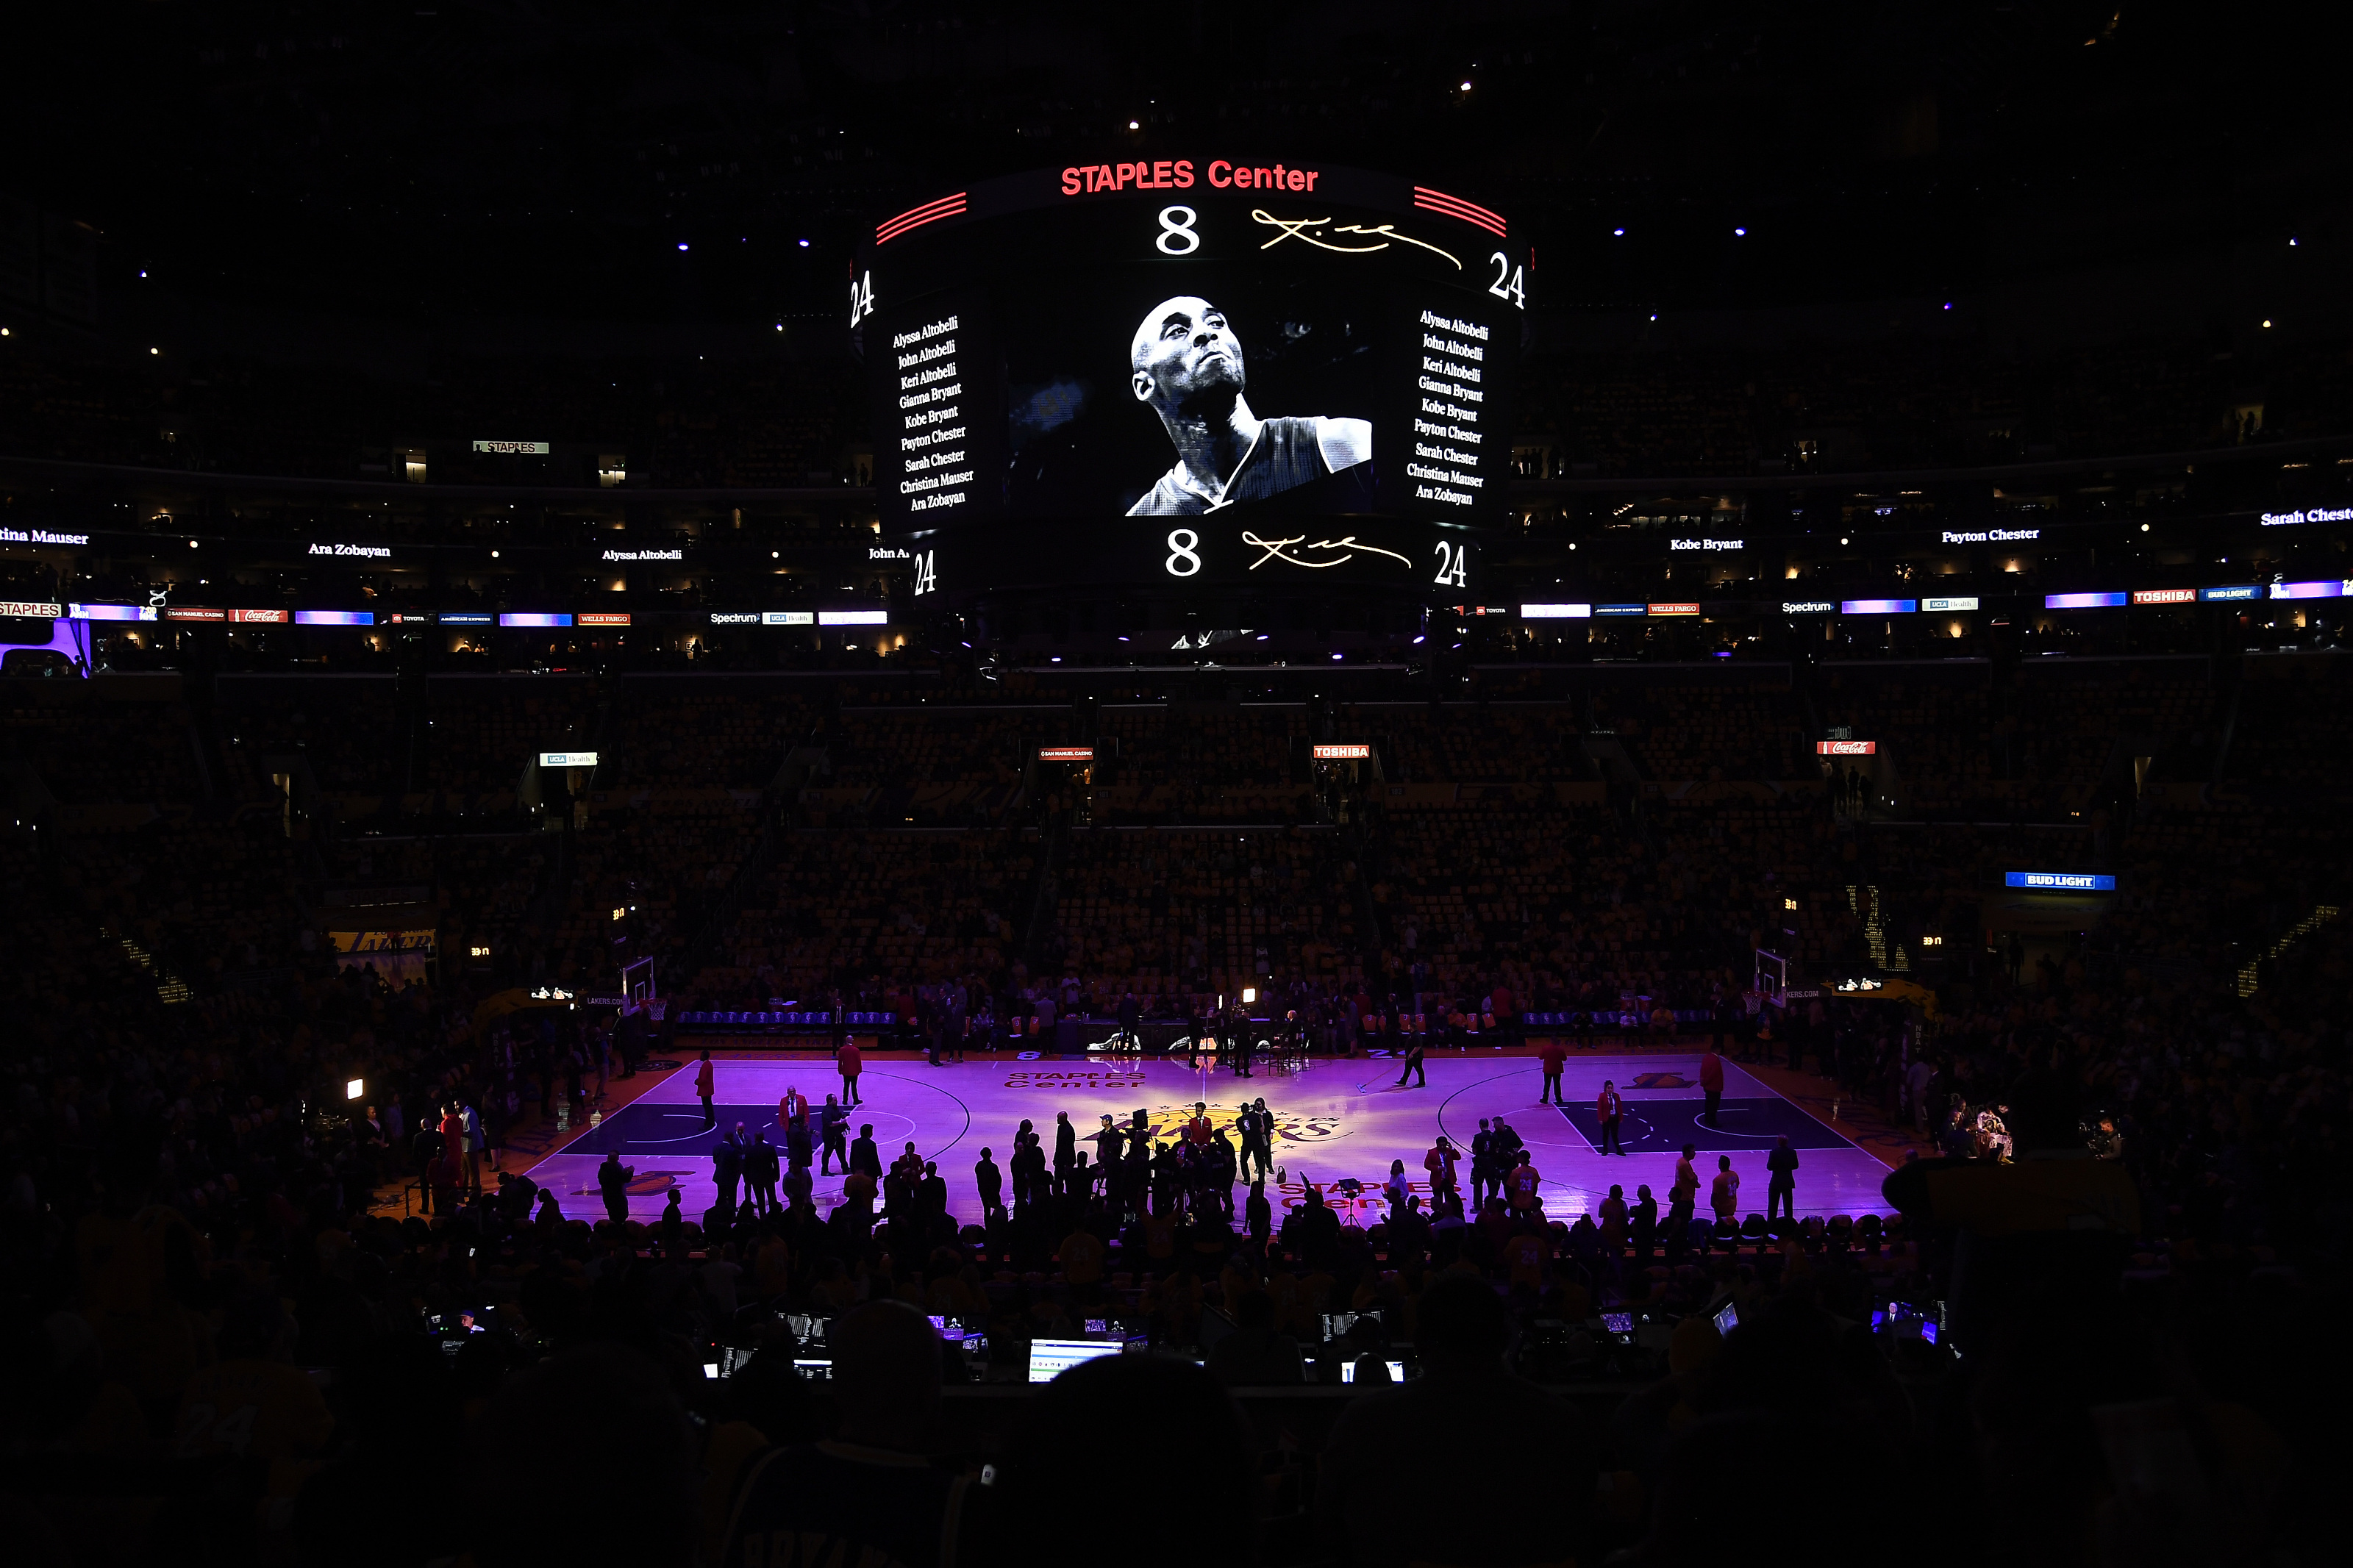 A memorable Lakers Night honoring Kobe, Gigi and the Bryant family